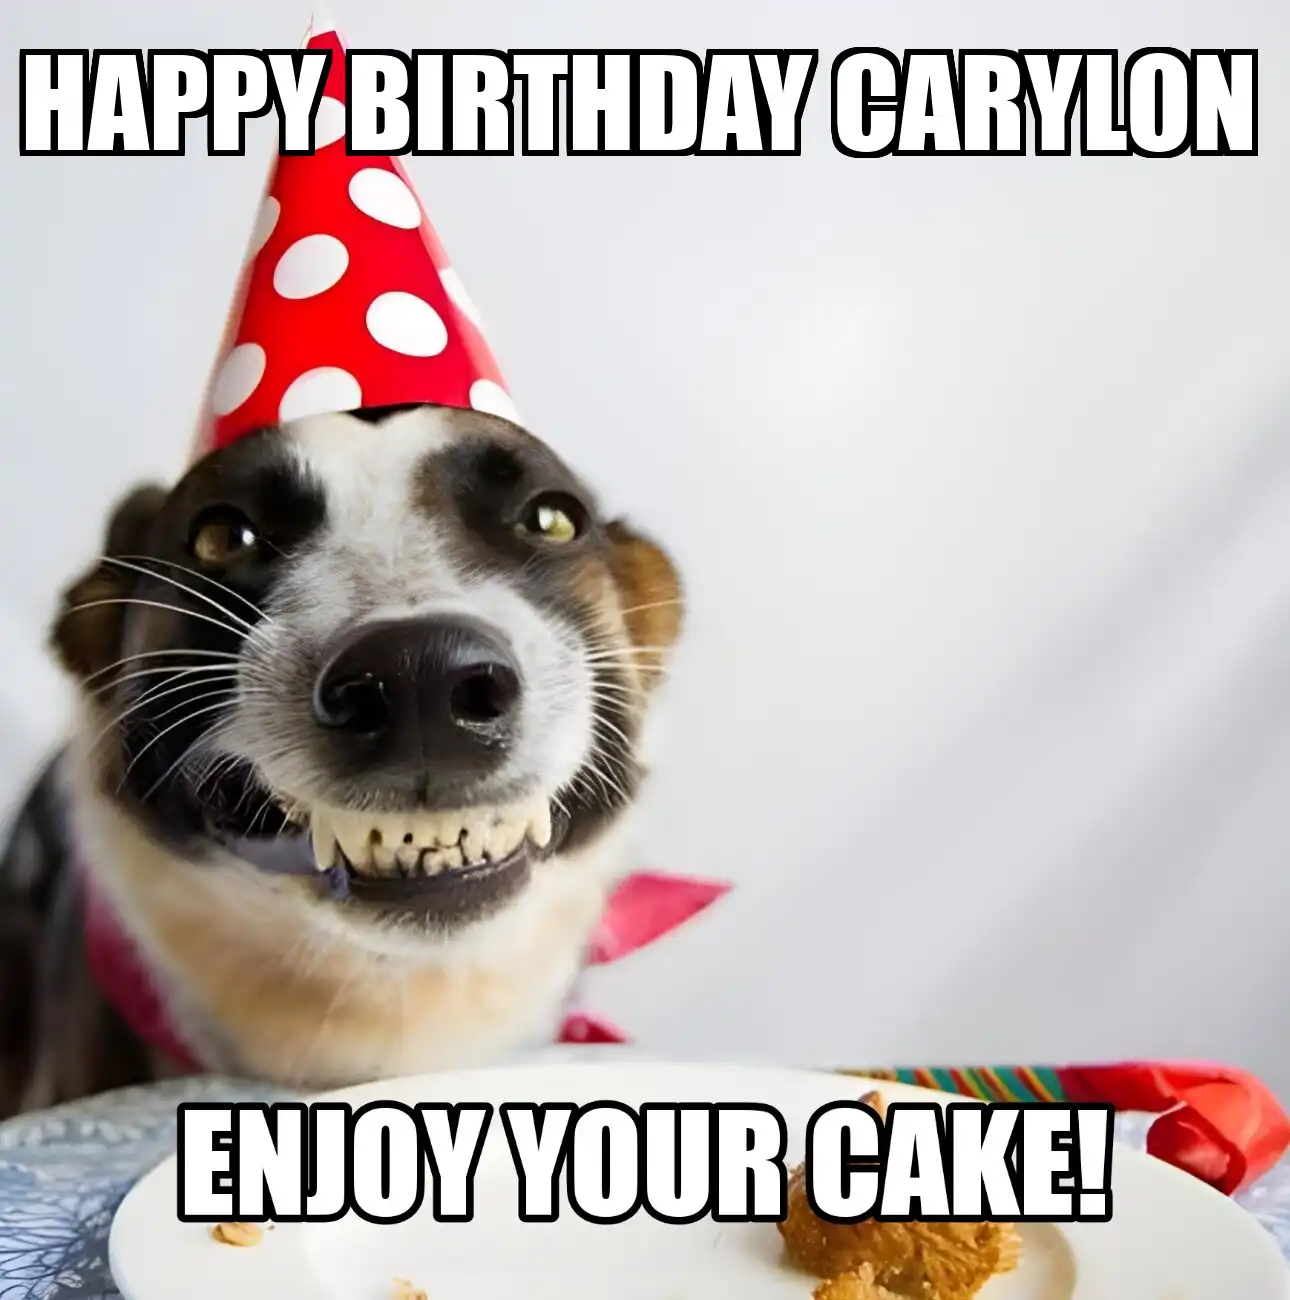 Happy Birthday Carylon Enjoy Your Cake Dog Meme